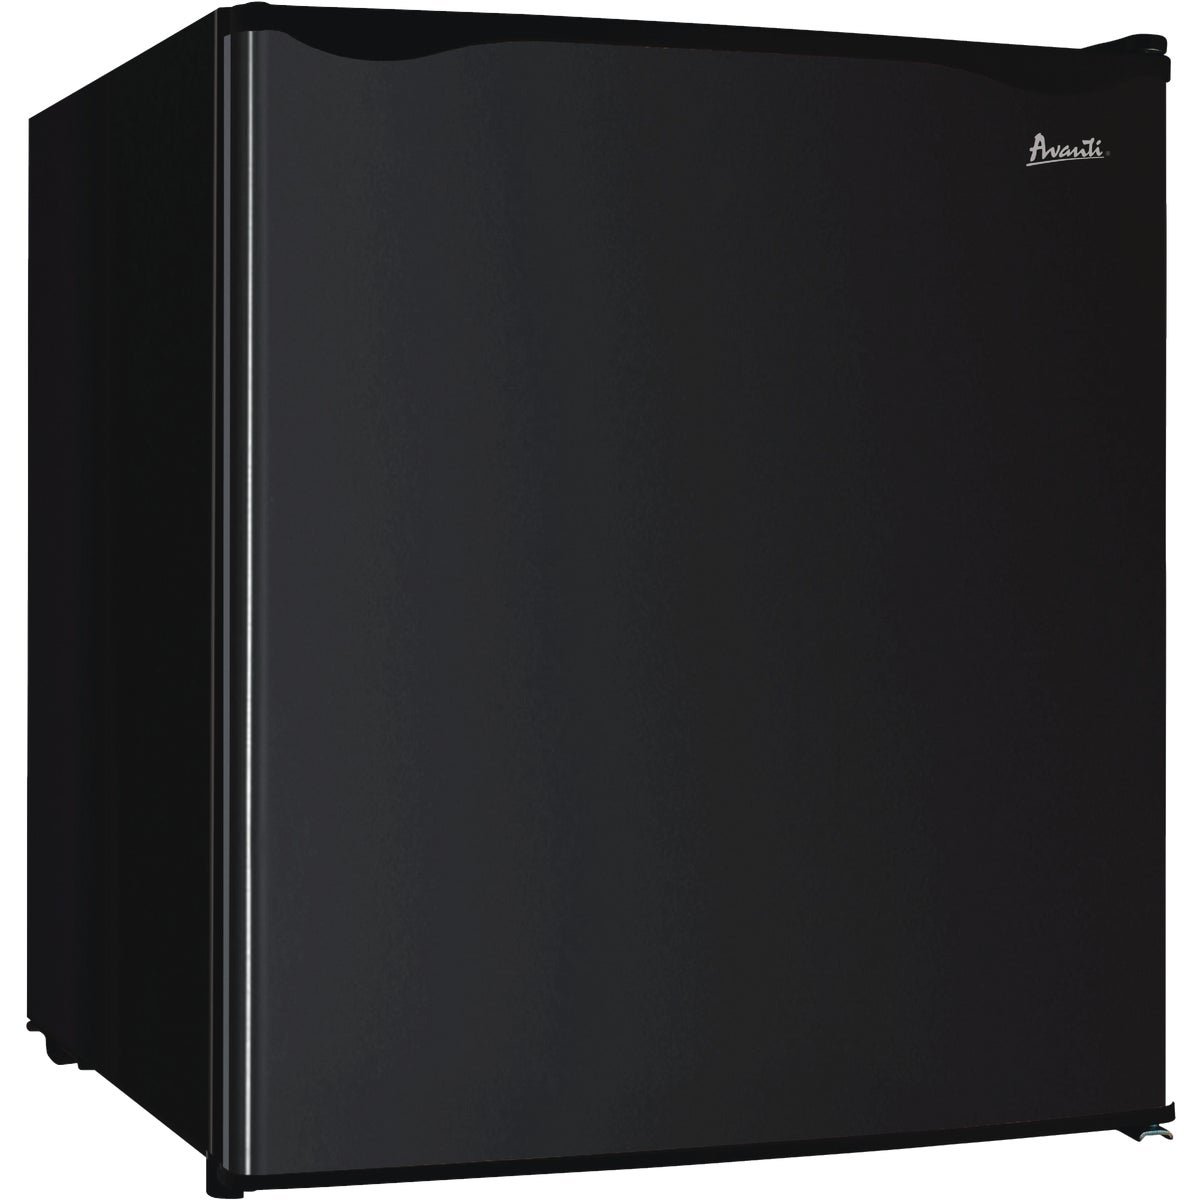 Avanti 1.6 Cu. Ft. Black Cube Refrigerator